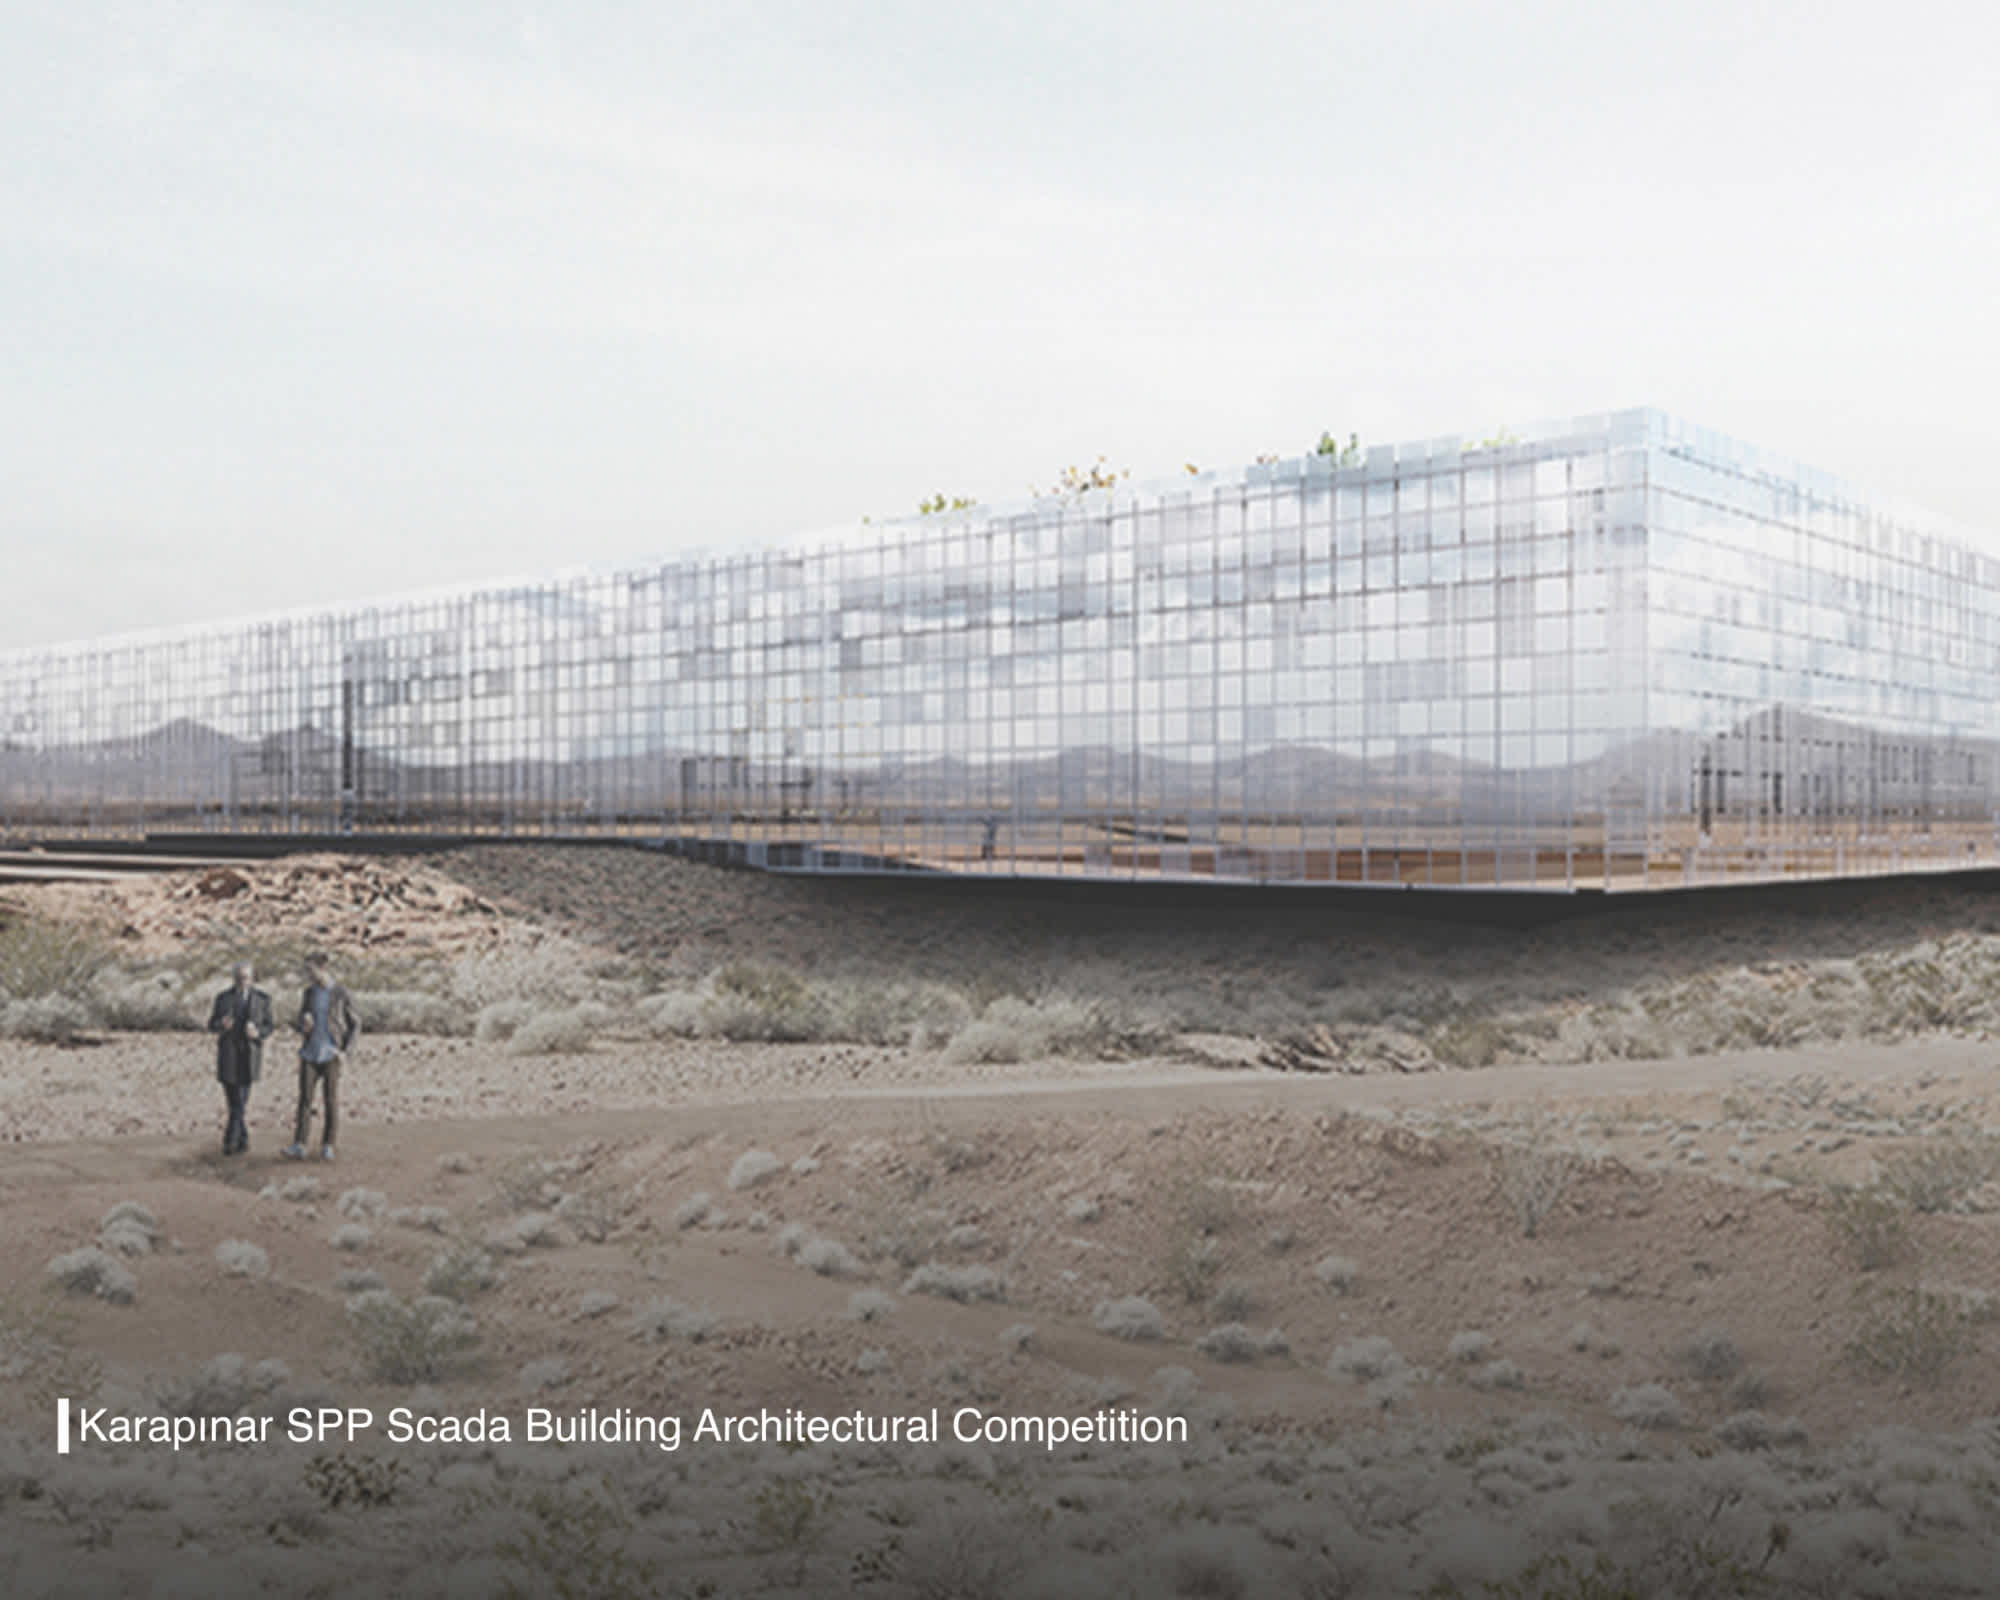 iF DESIGN MARATHON 2022: Turkey Design Council - Karapınar SPP Scada Building Architectural Competition